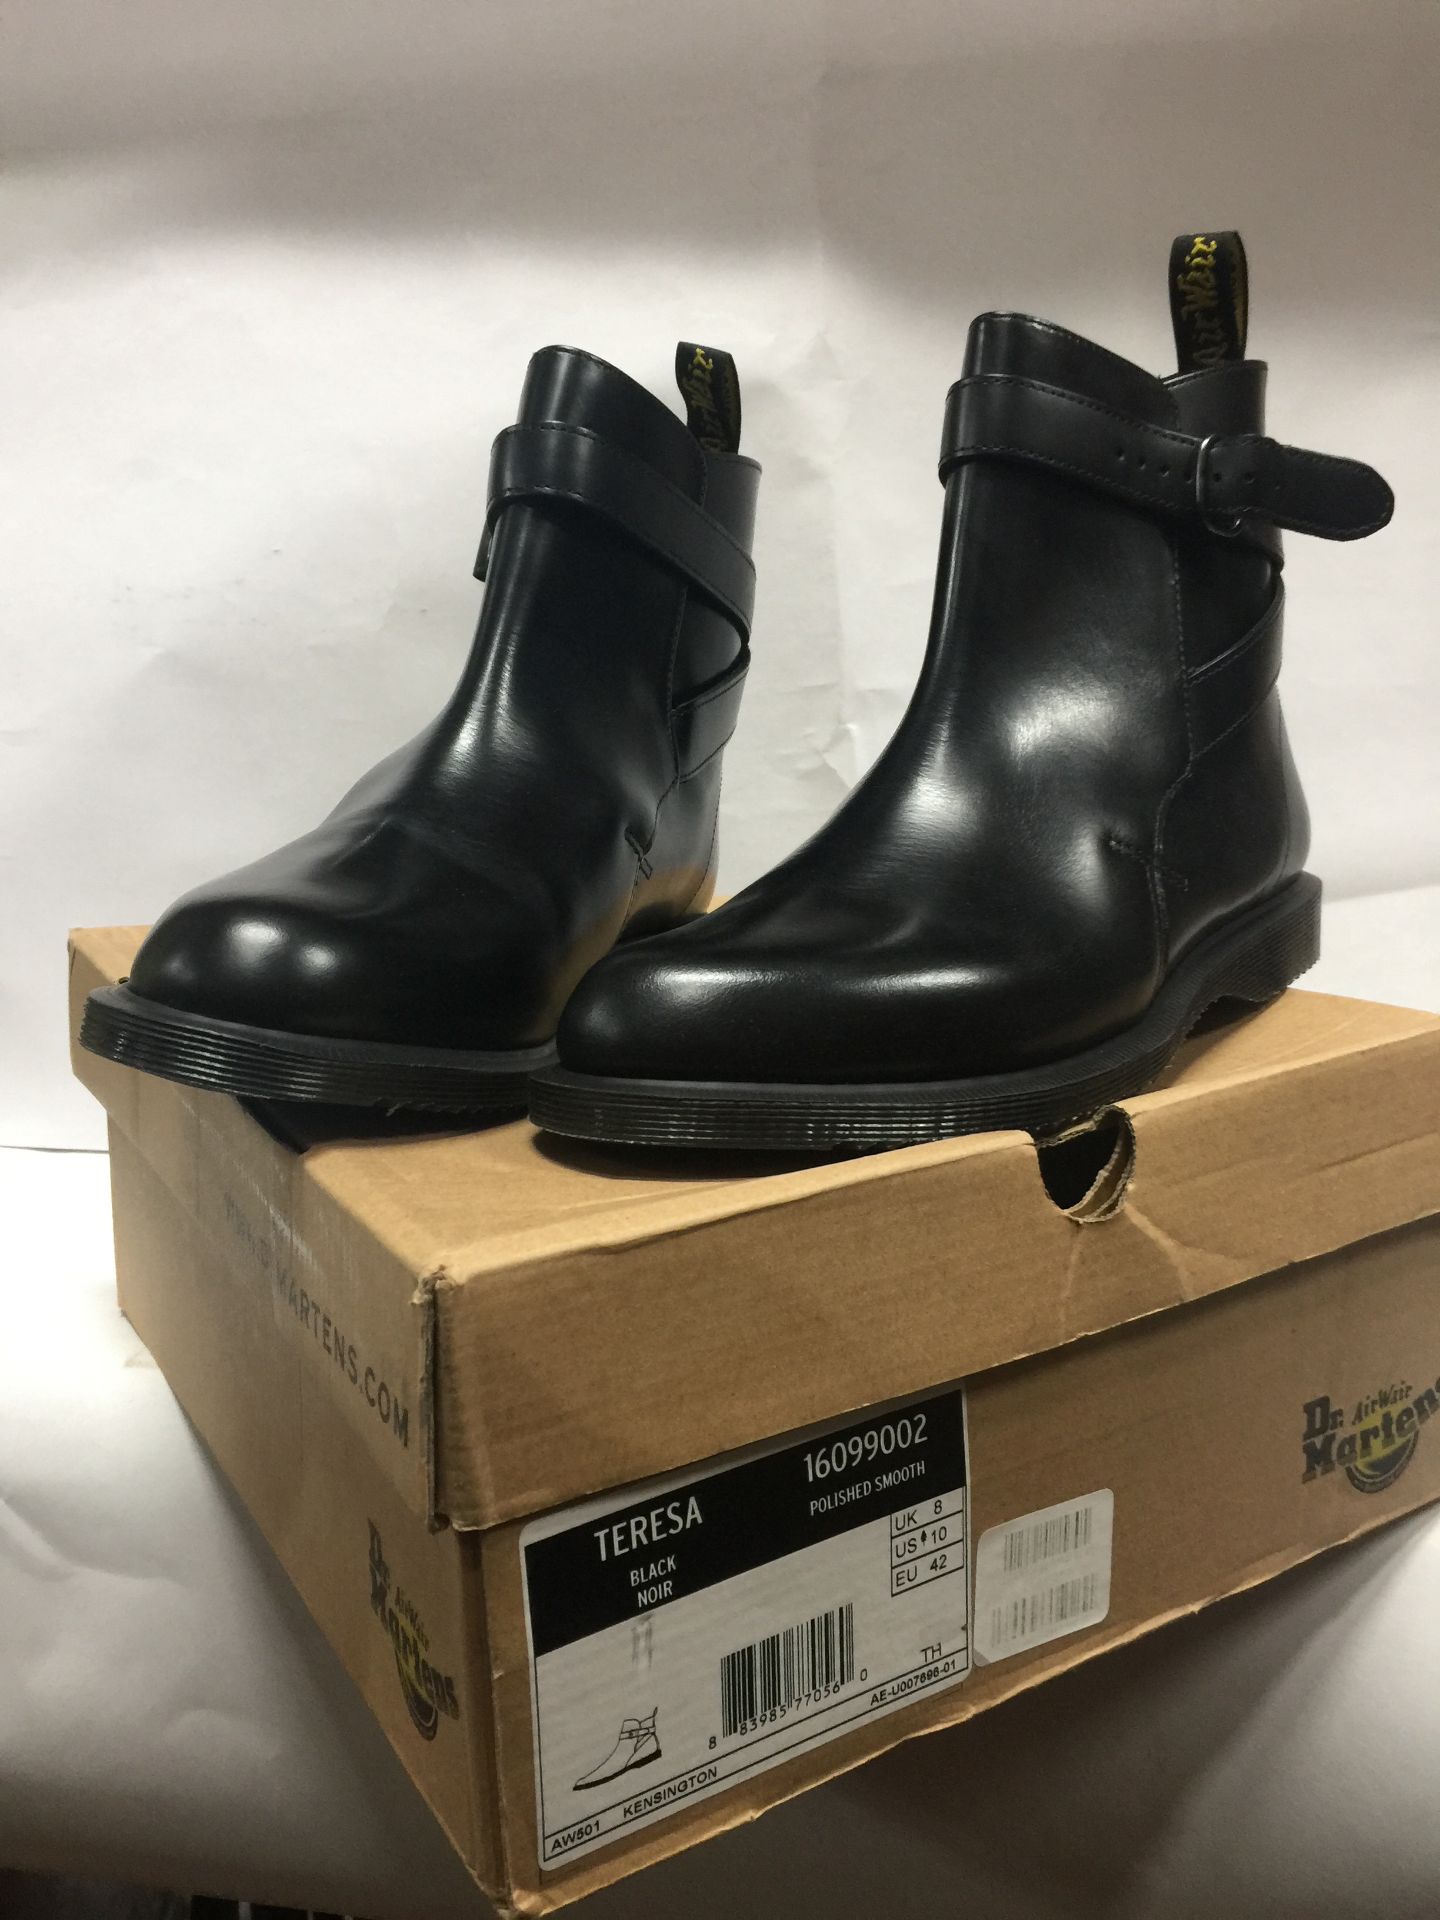 4 x Dr. Martin Boots/Sandles Mixed Sizes, Styles and Colours Size Ranging UK 4 - UK 8- Customer Retu